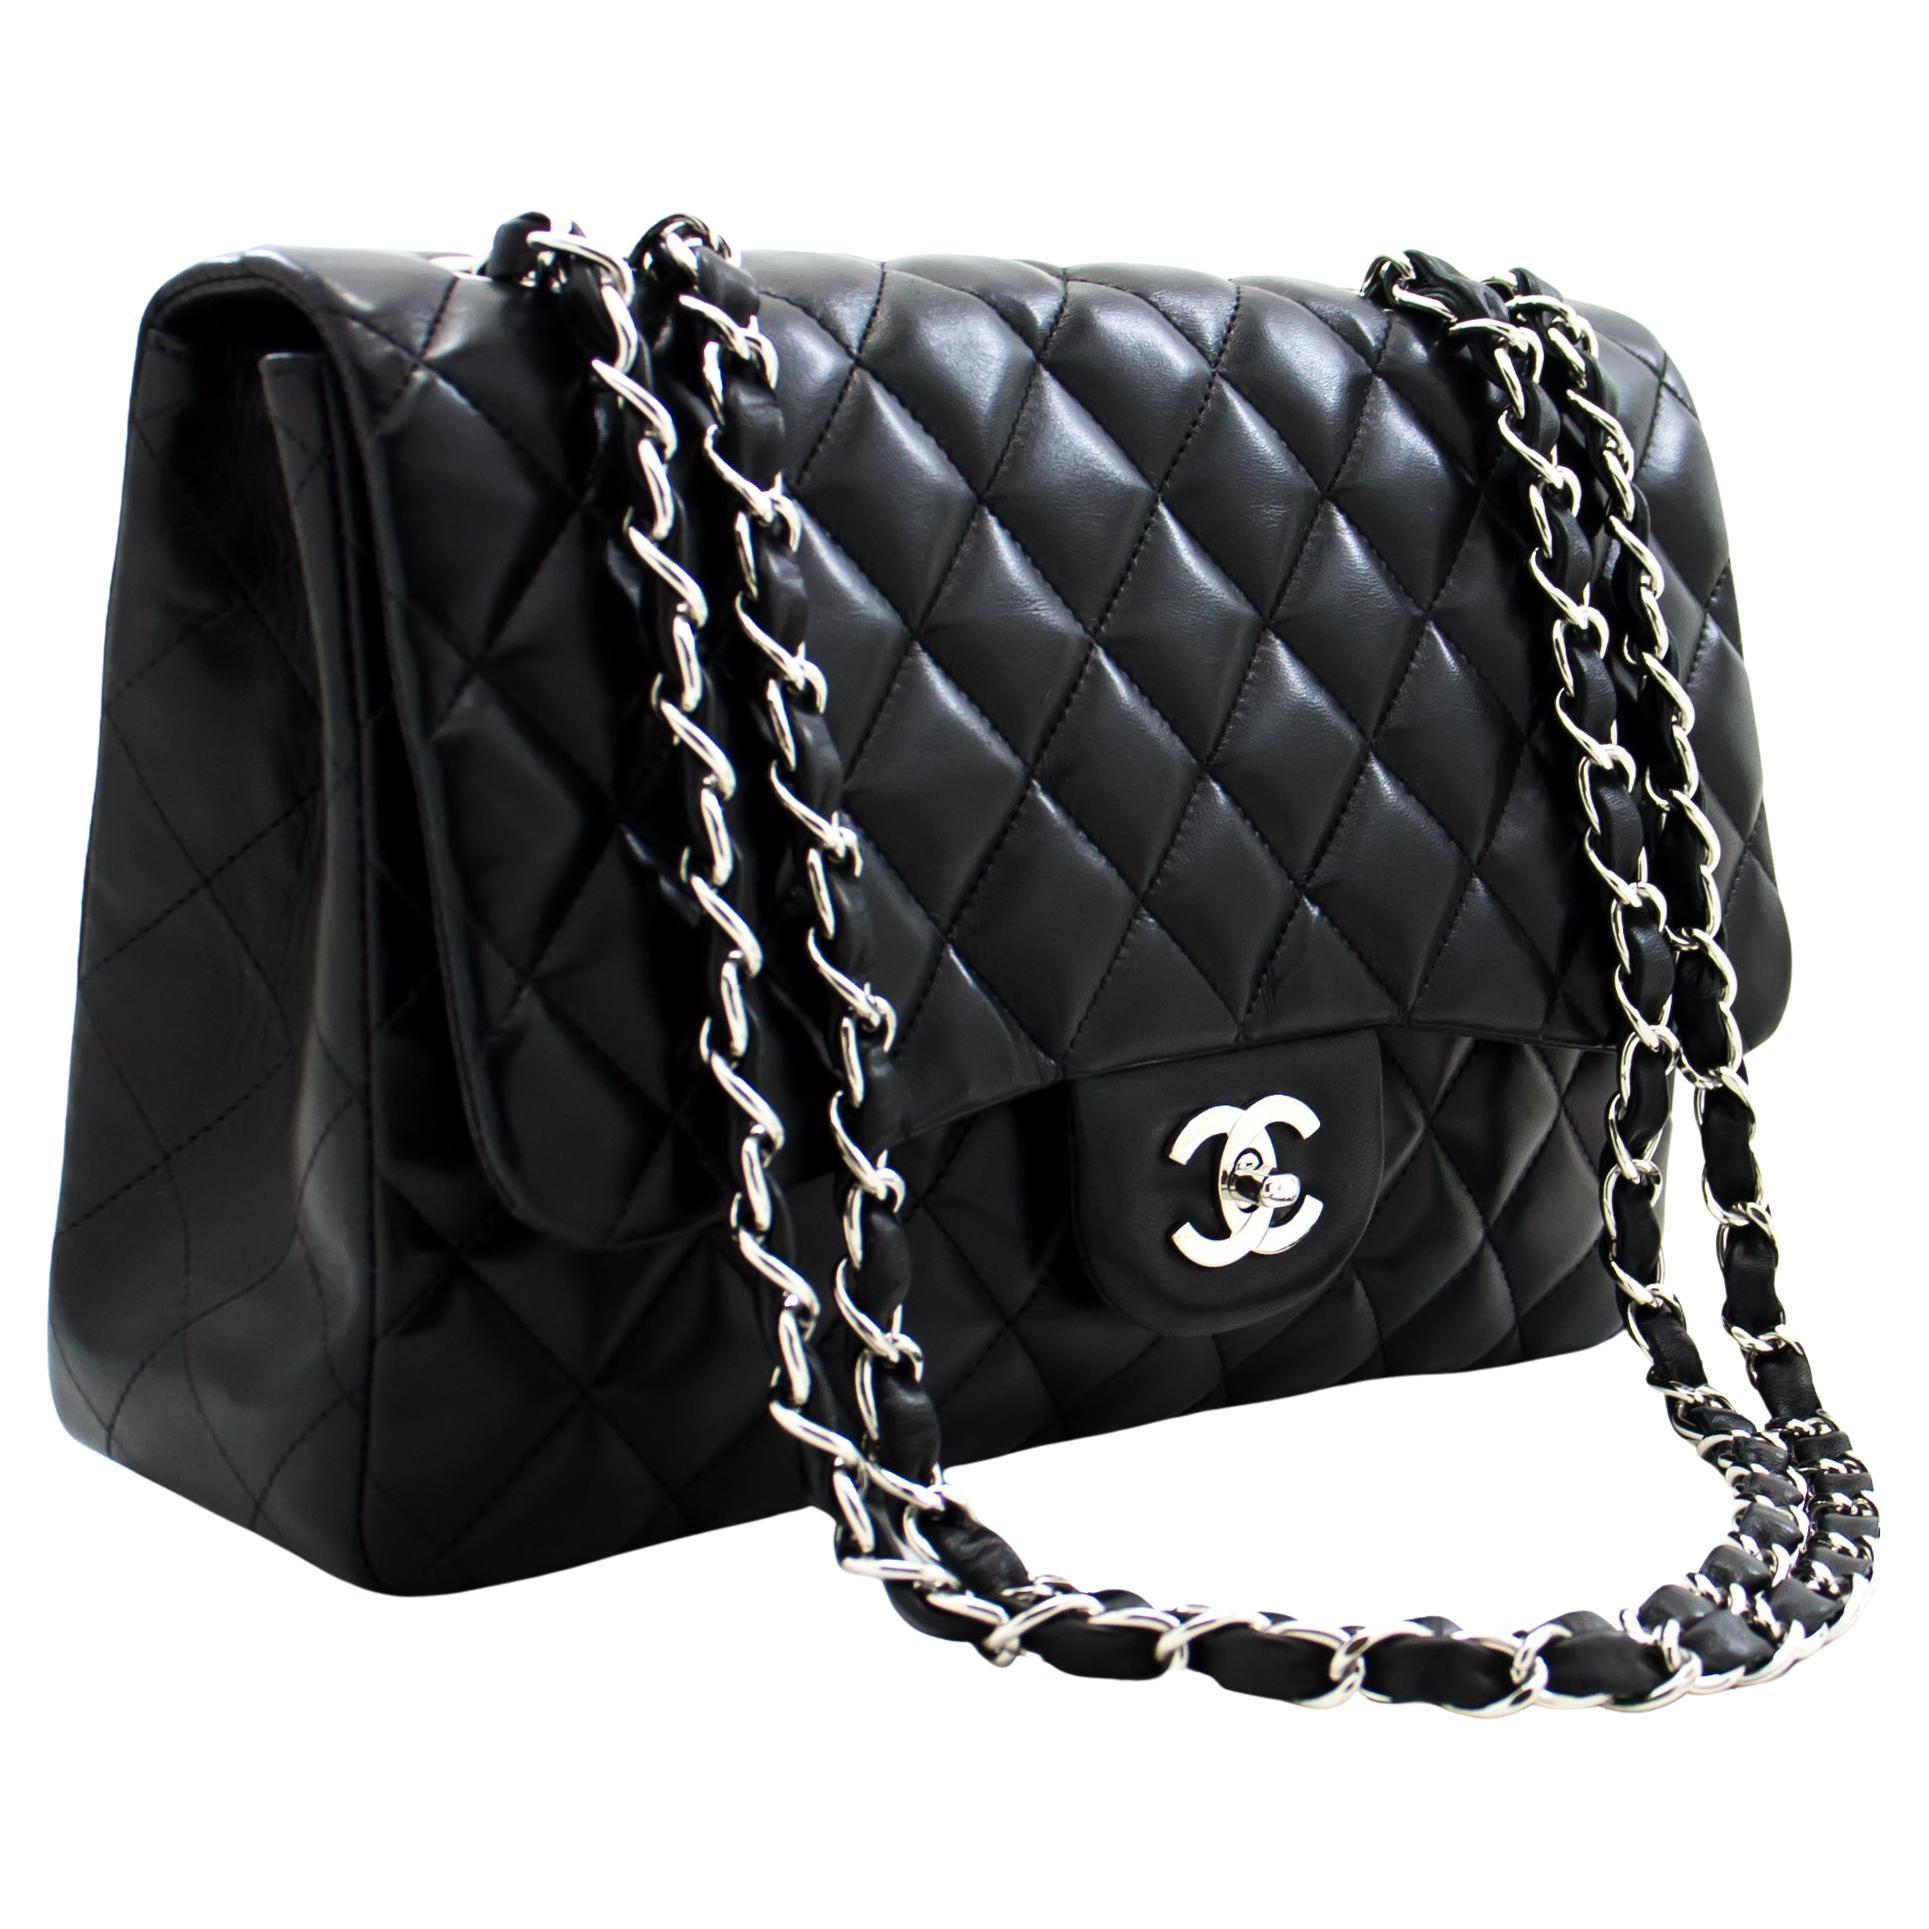 Bolsas Chanel  Blog de Moda  LÊ Chodraui